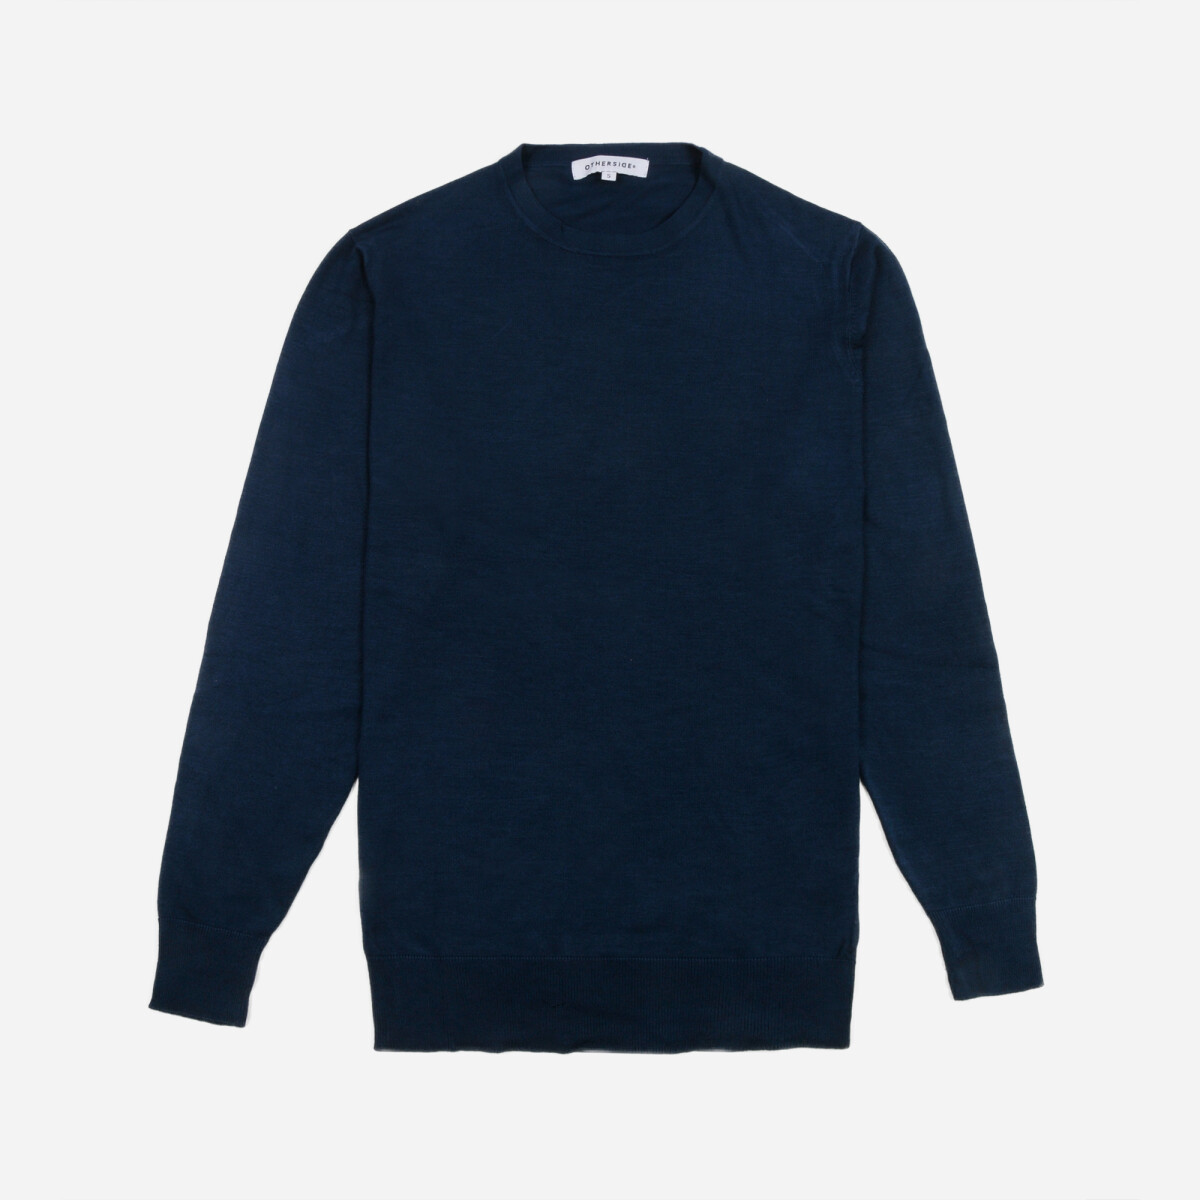 Sweater escote a la base - UNISEX - AZUL MARINO 